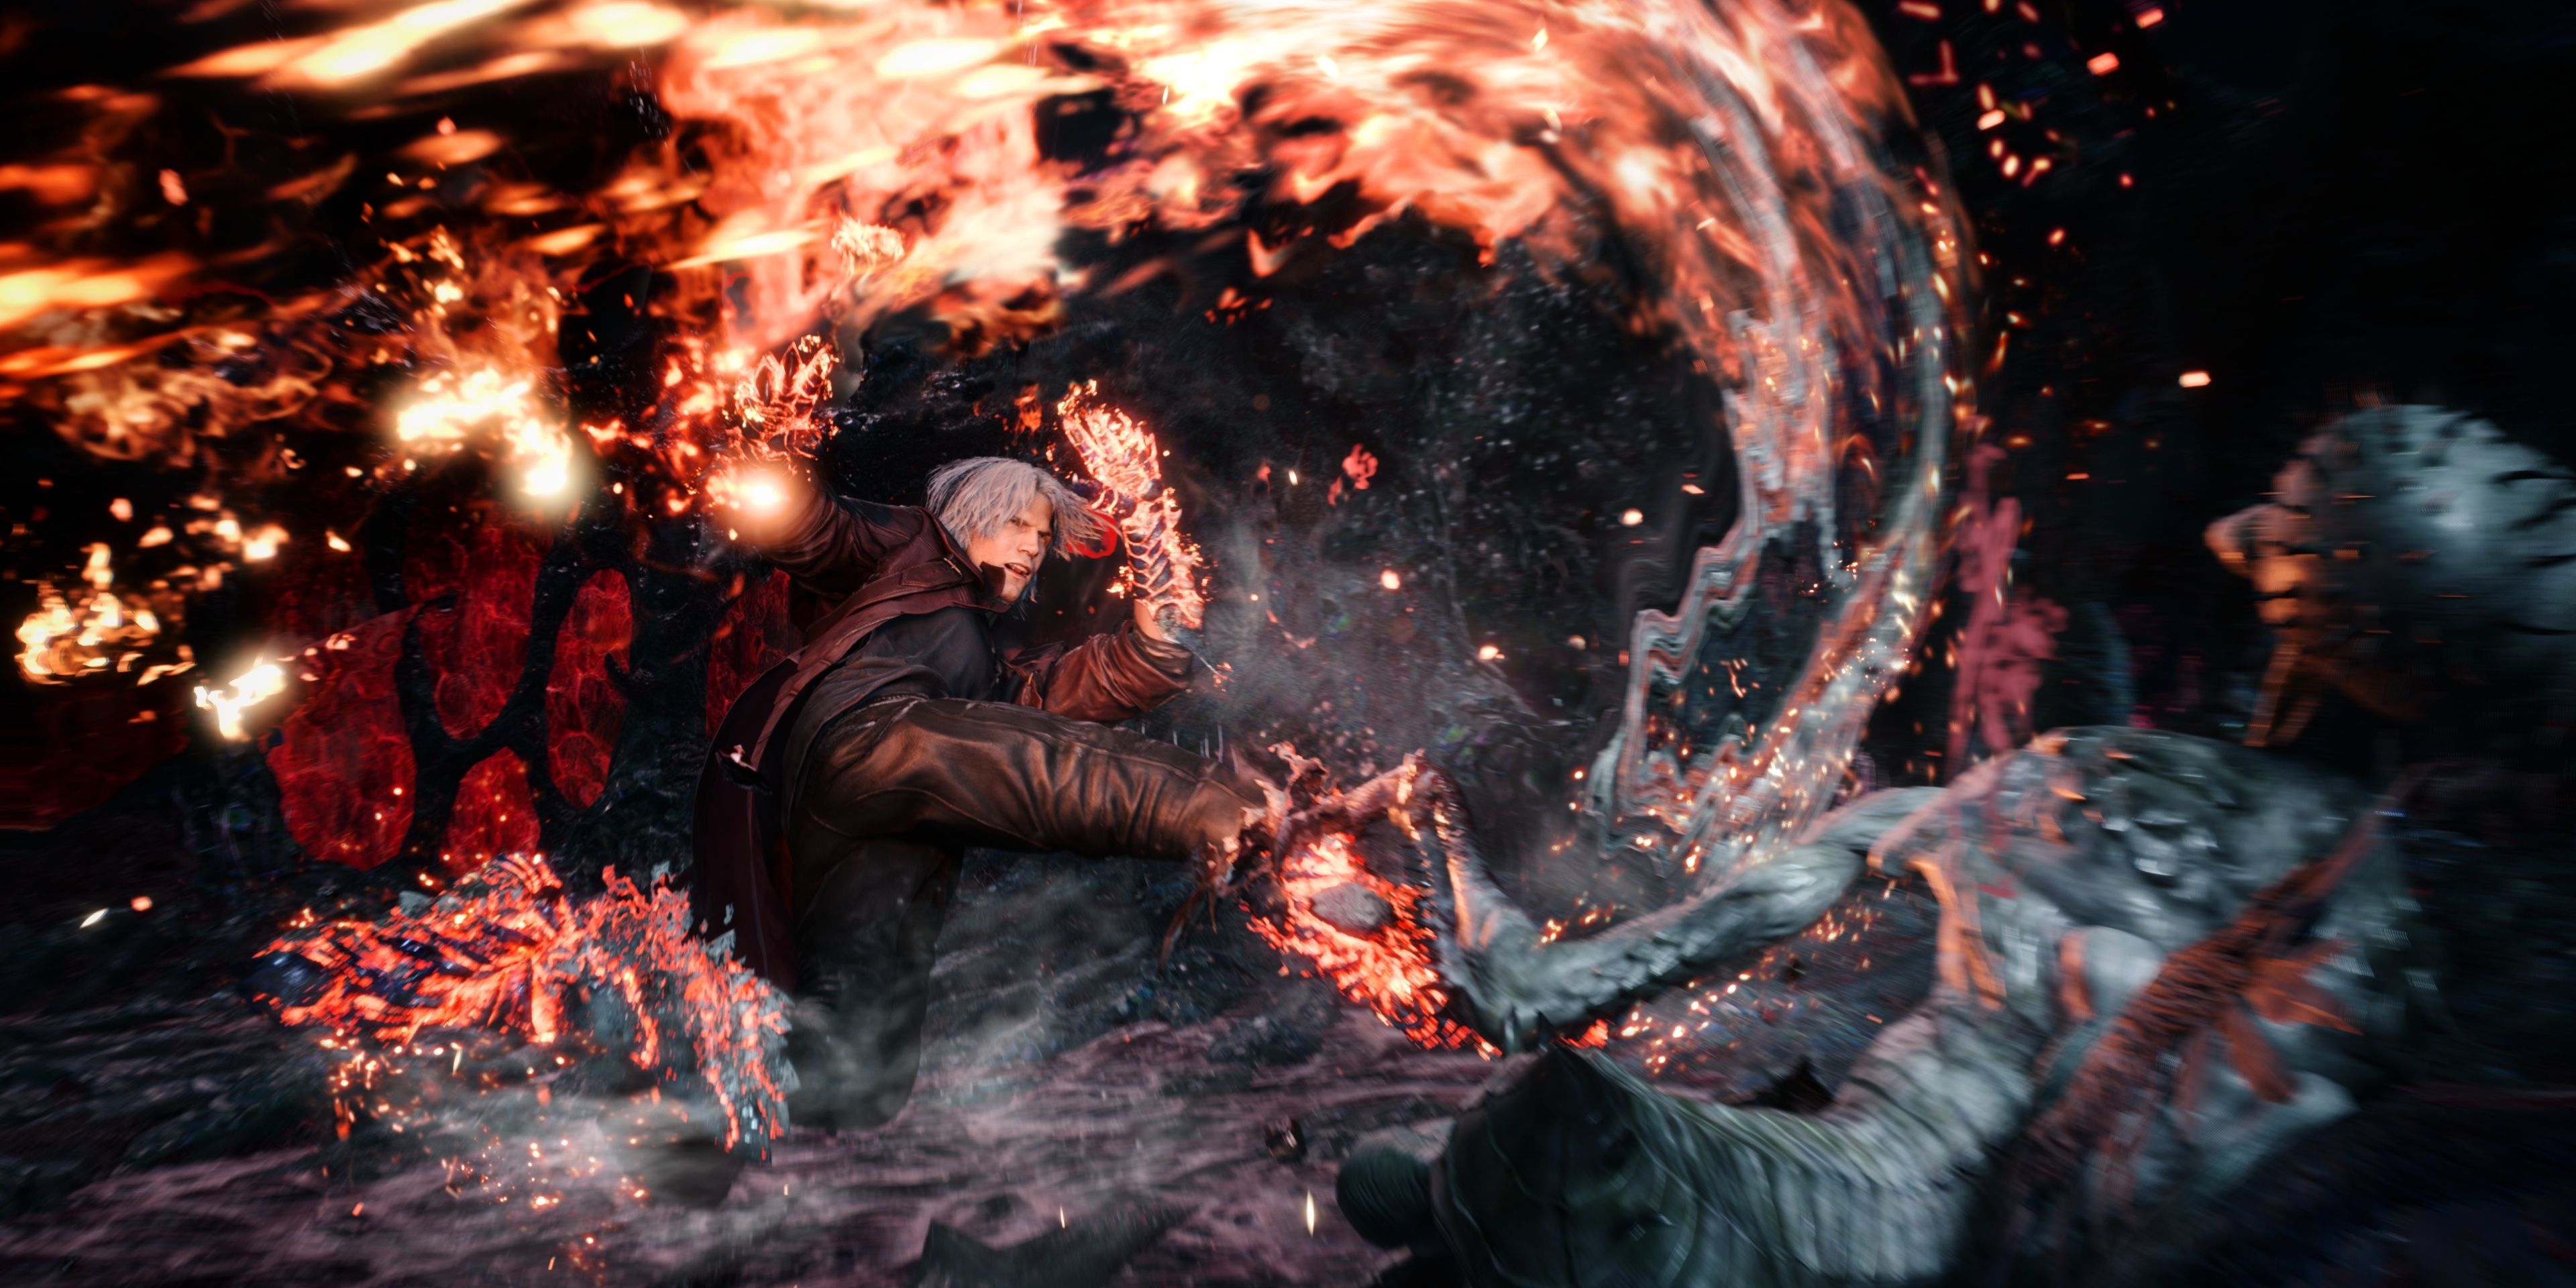 Dante using Balrog in its kick mode against enemies